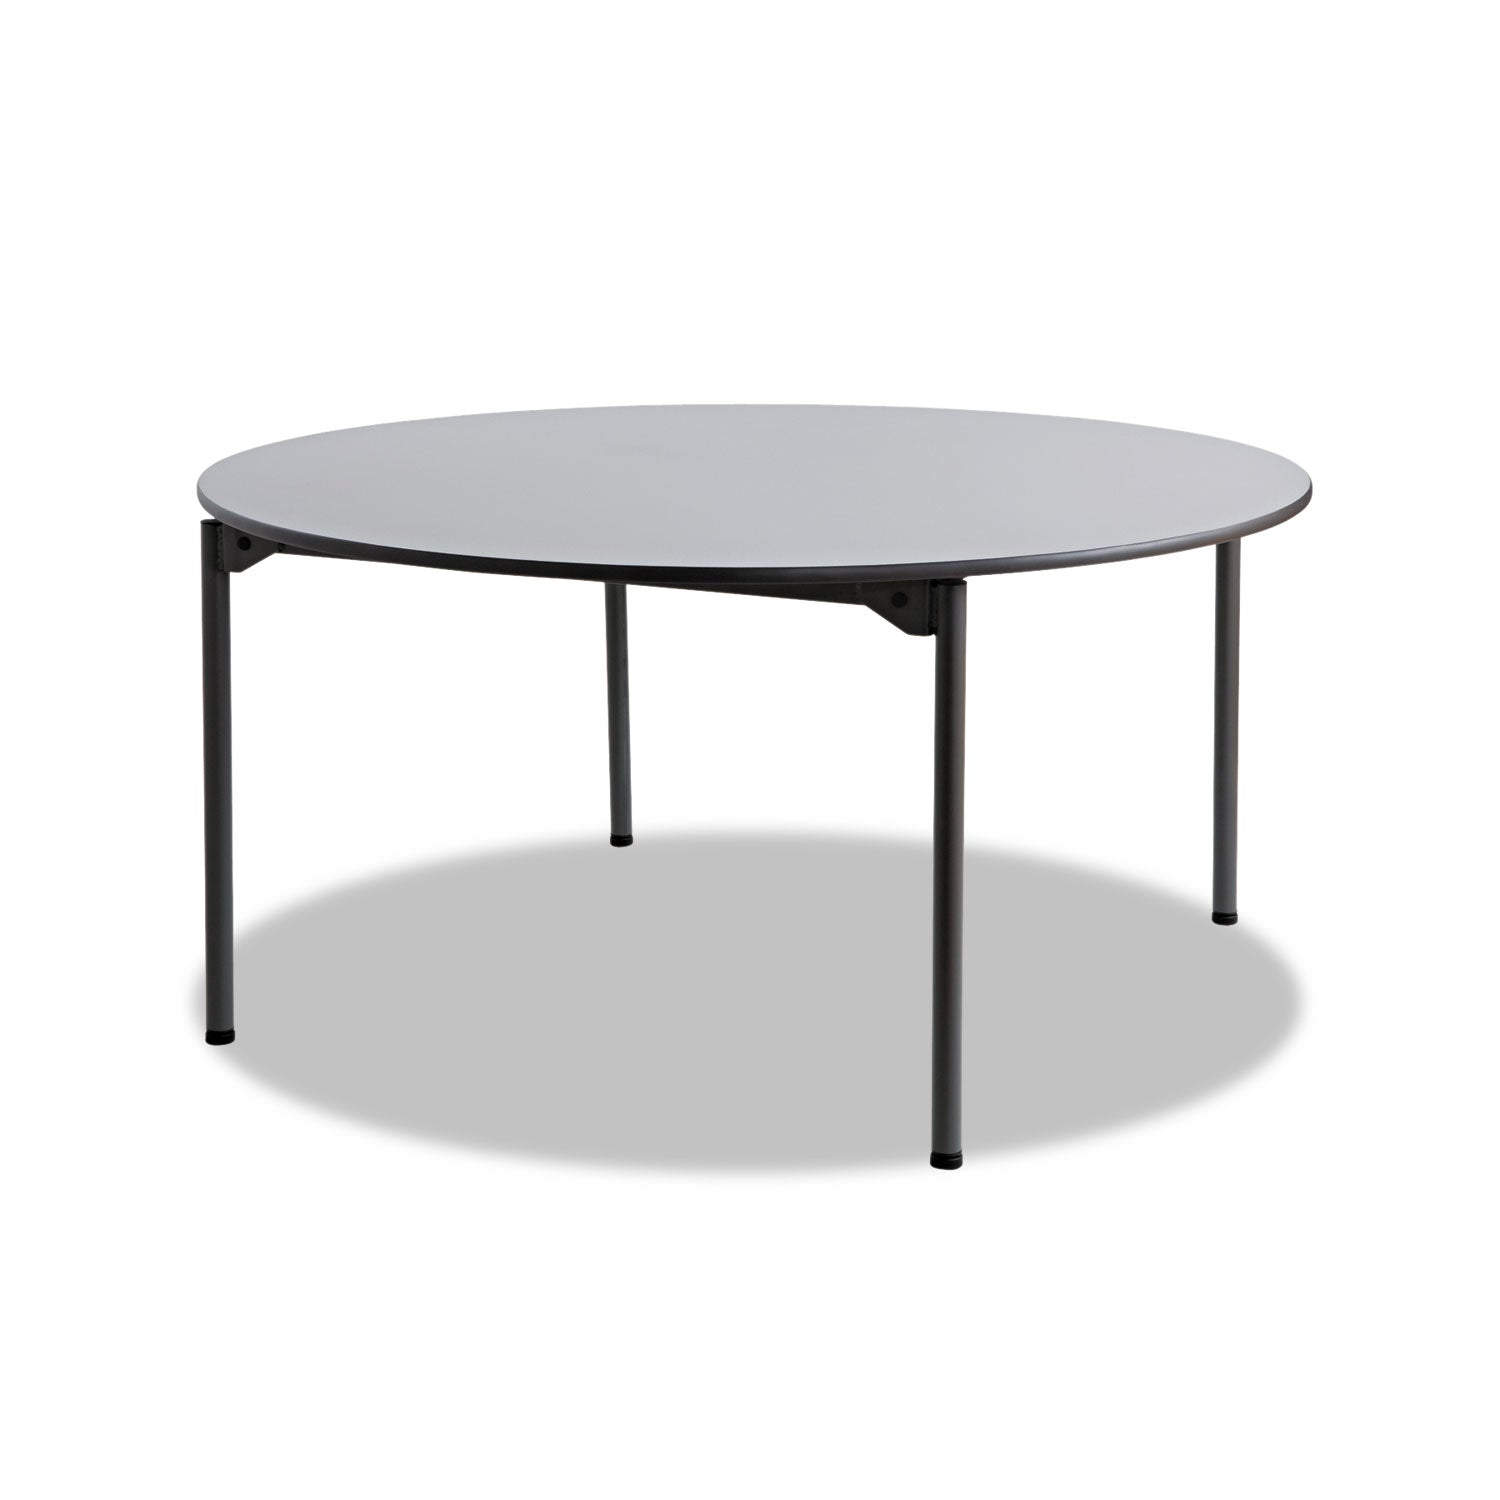 Maxx Legroom Wood Folding Table, Round, 60" x 29.5", Gray/Charcoal - 